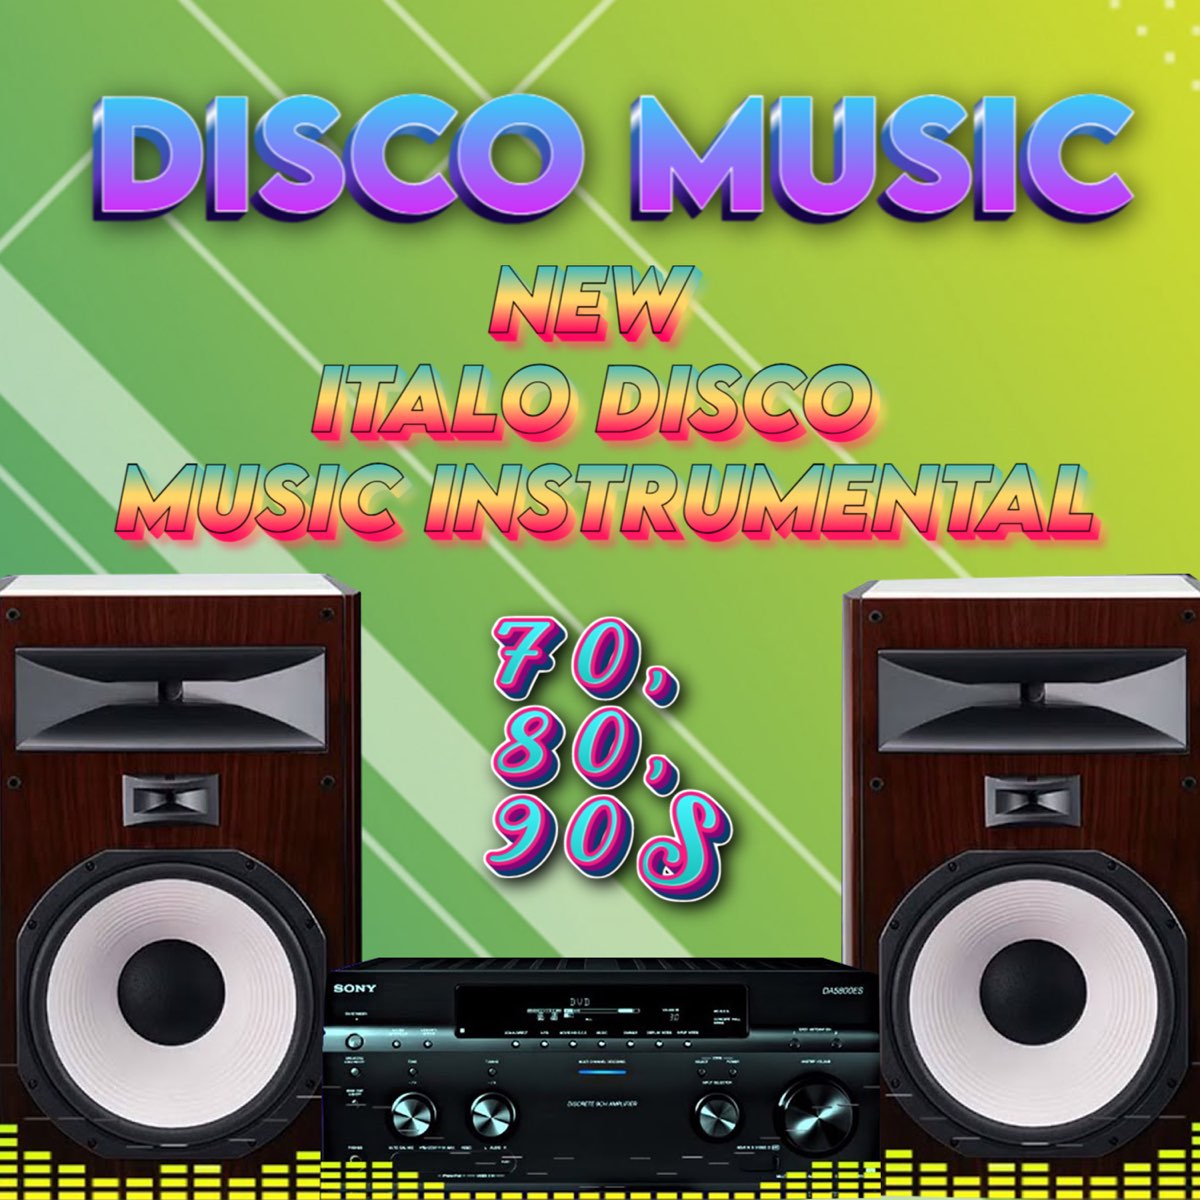 DISCO MUSIC - New Italo Disco Music Instrumental, Vol. 4 by KorgStyle Life  on Apple Music